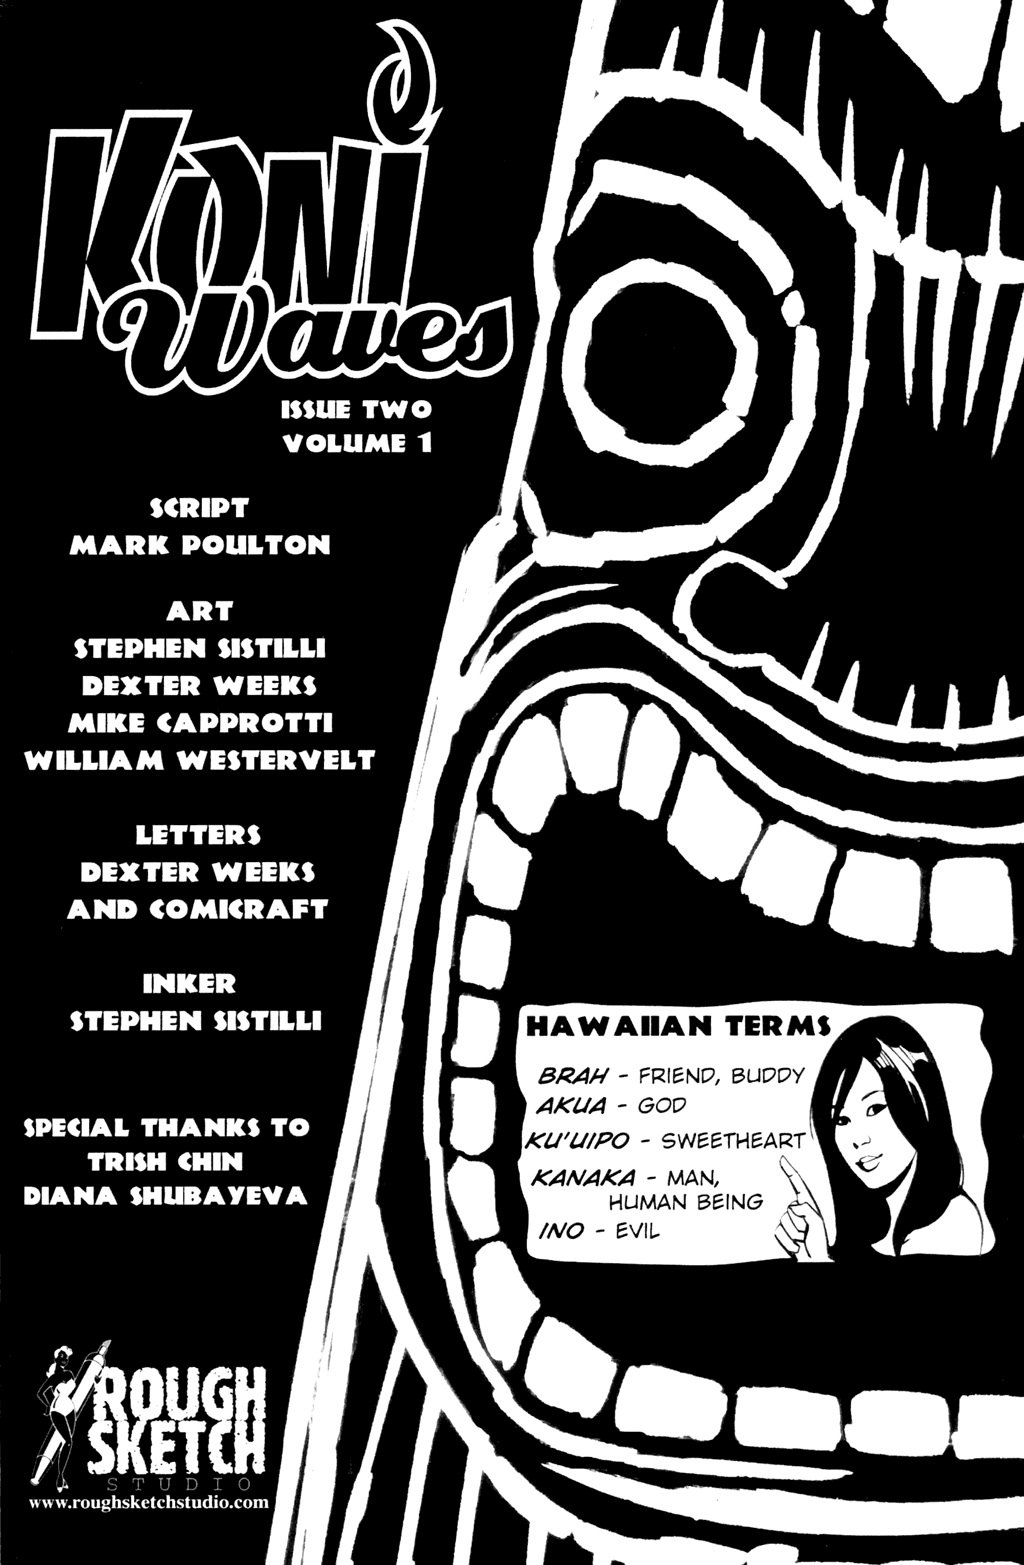 Read online Koni Waves comic -  Issue #2 - 26